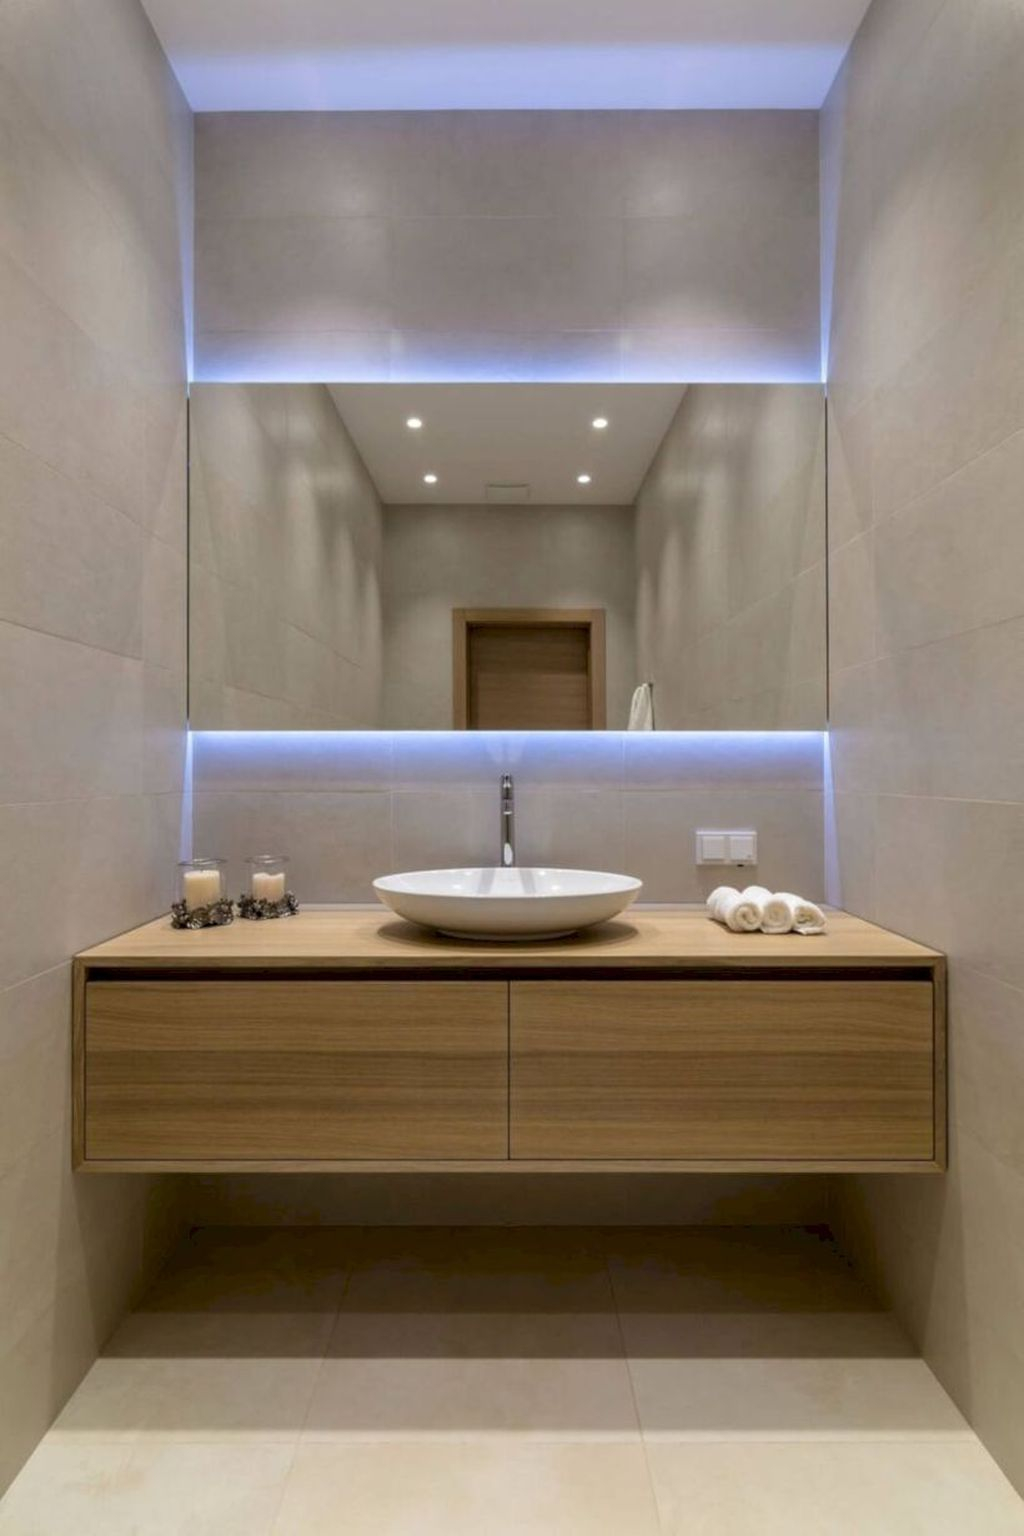 Latest Bathroom Design Ideas To Try Asap 03